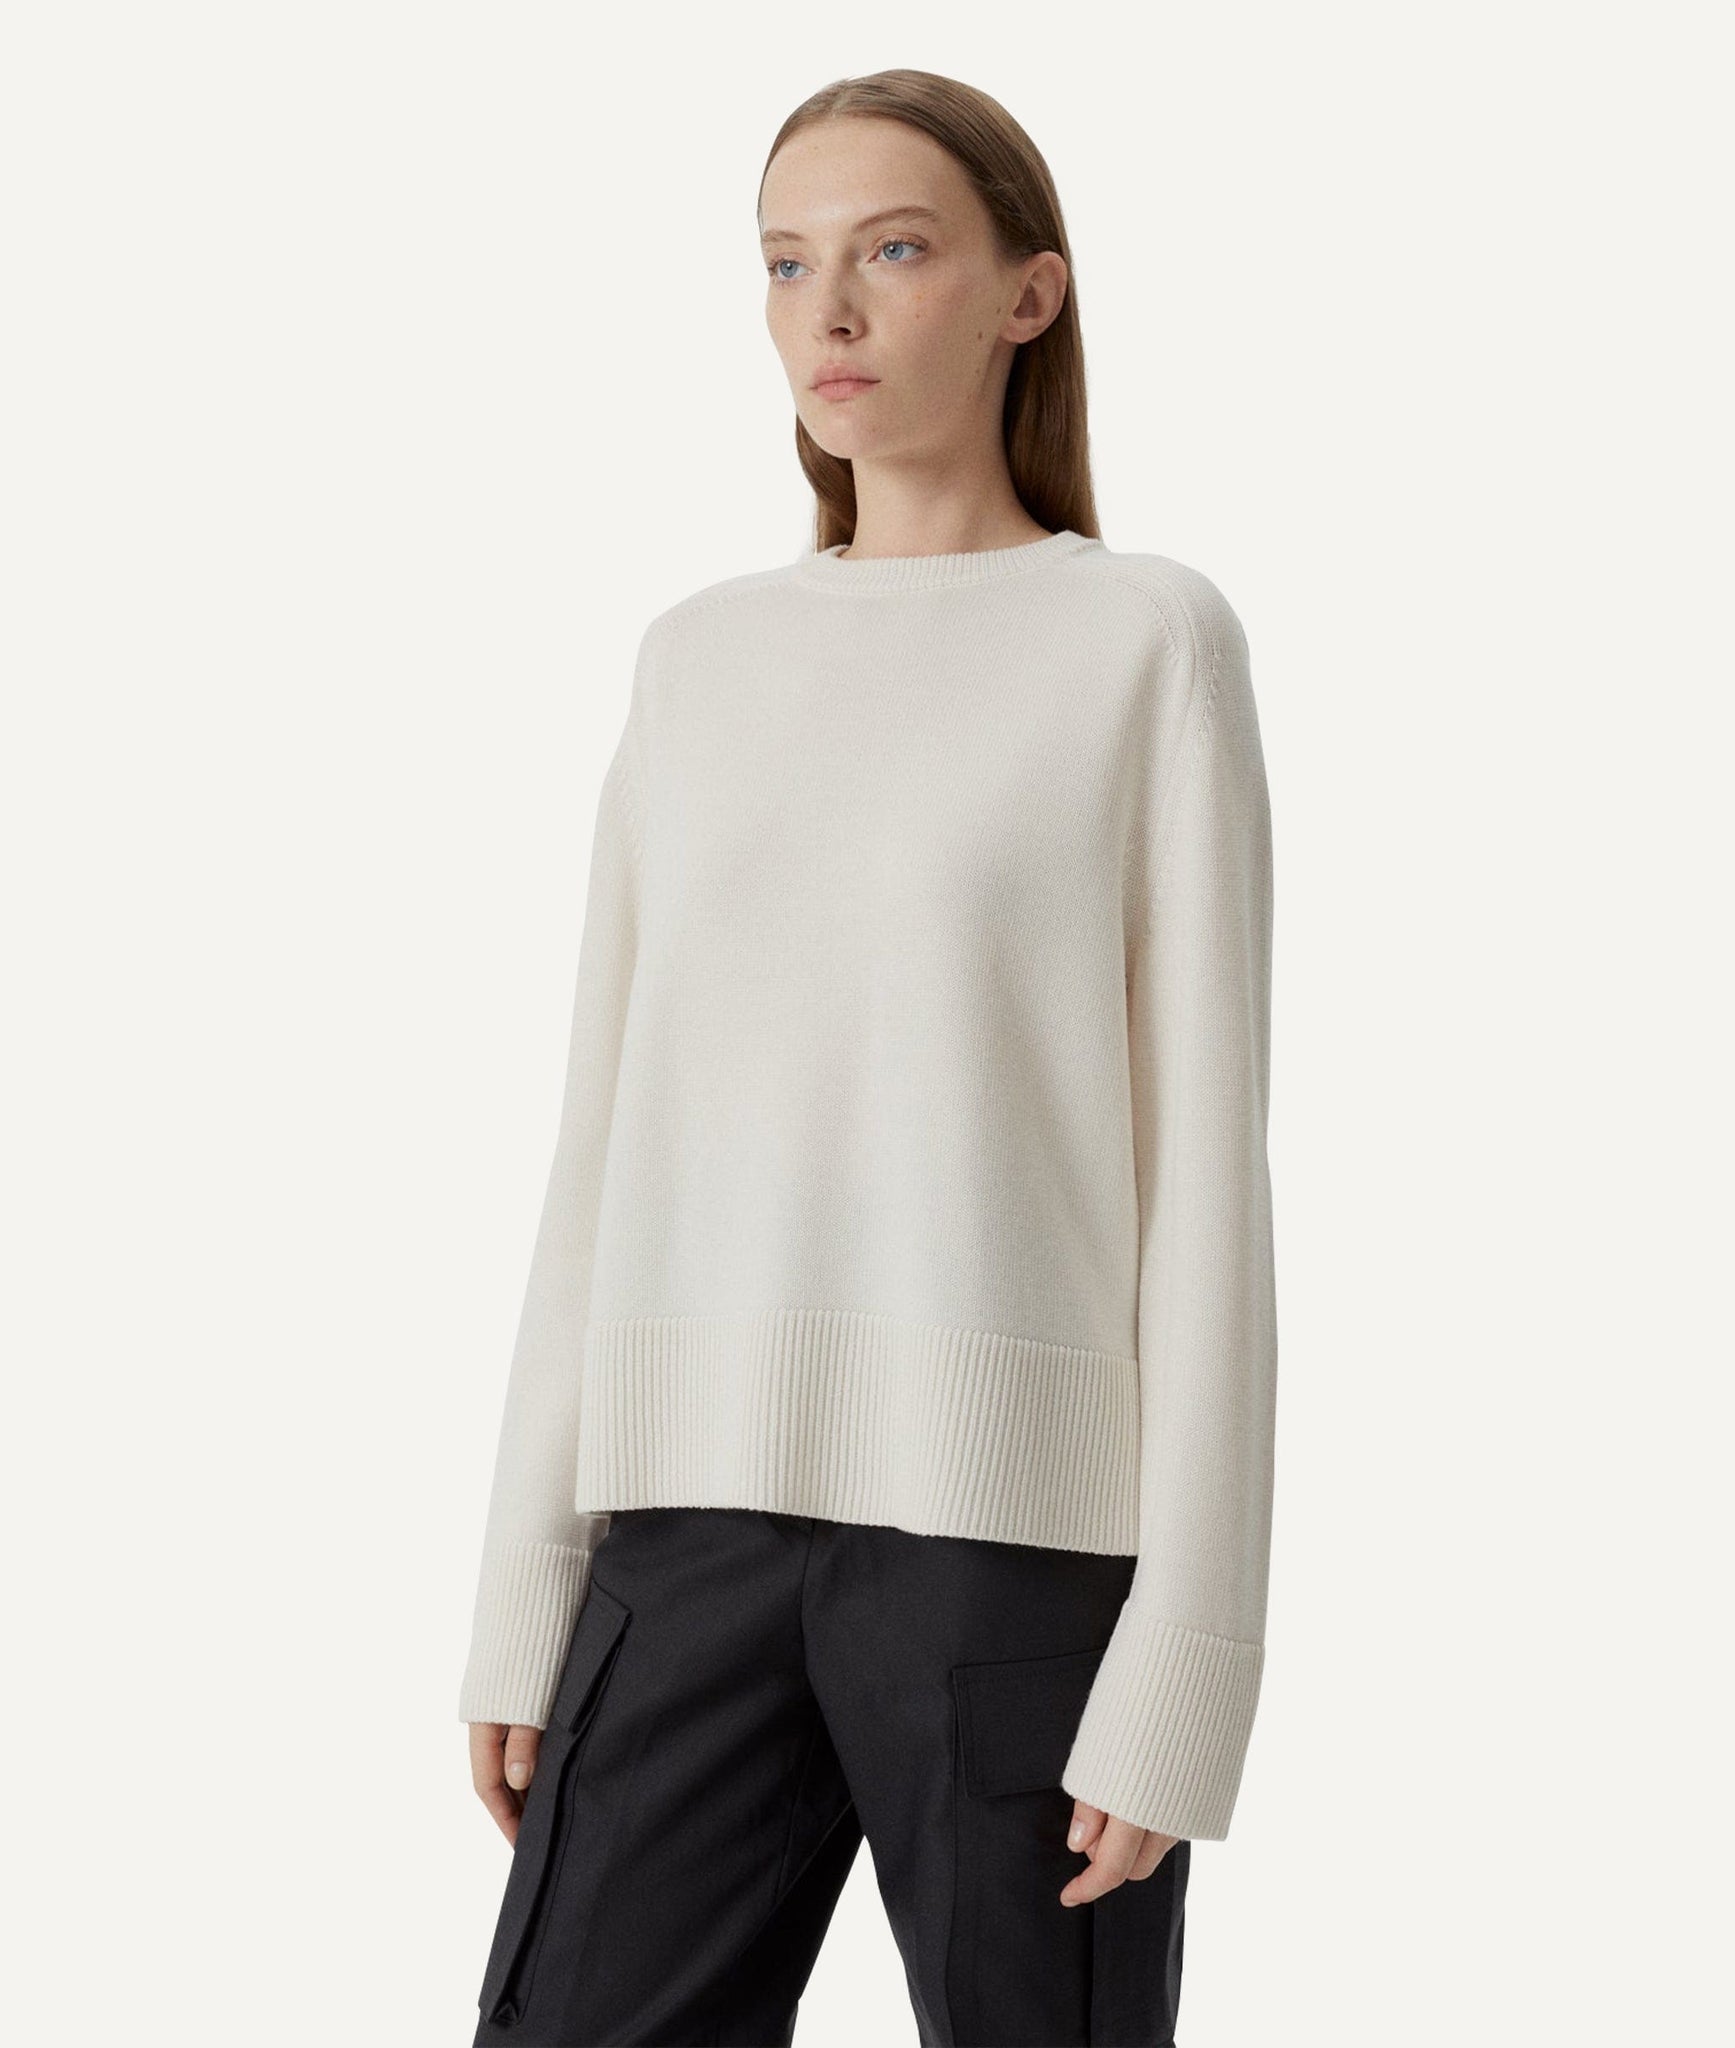 The Merino Wool Boxy Sweater